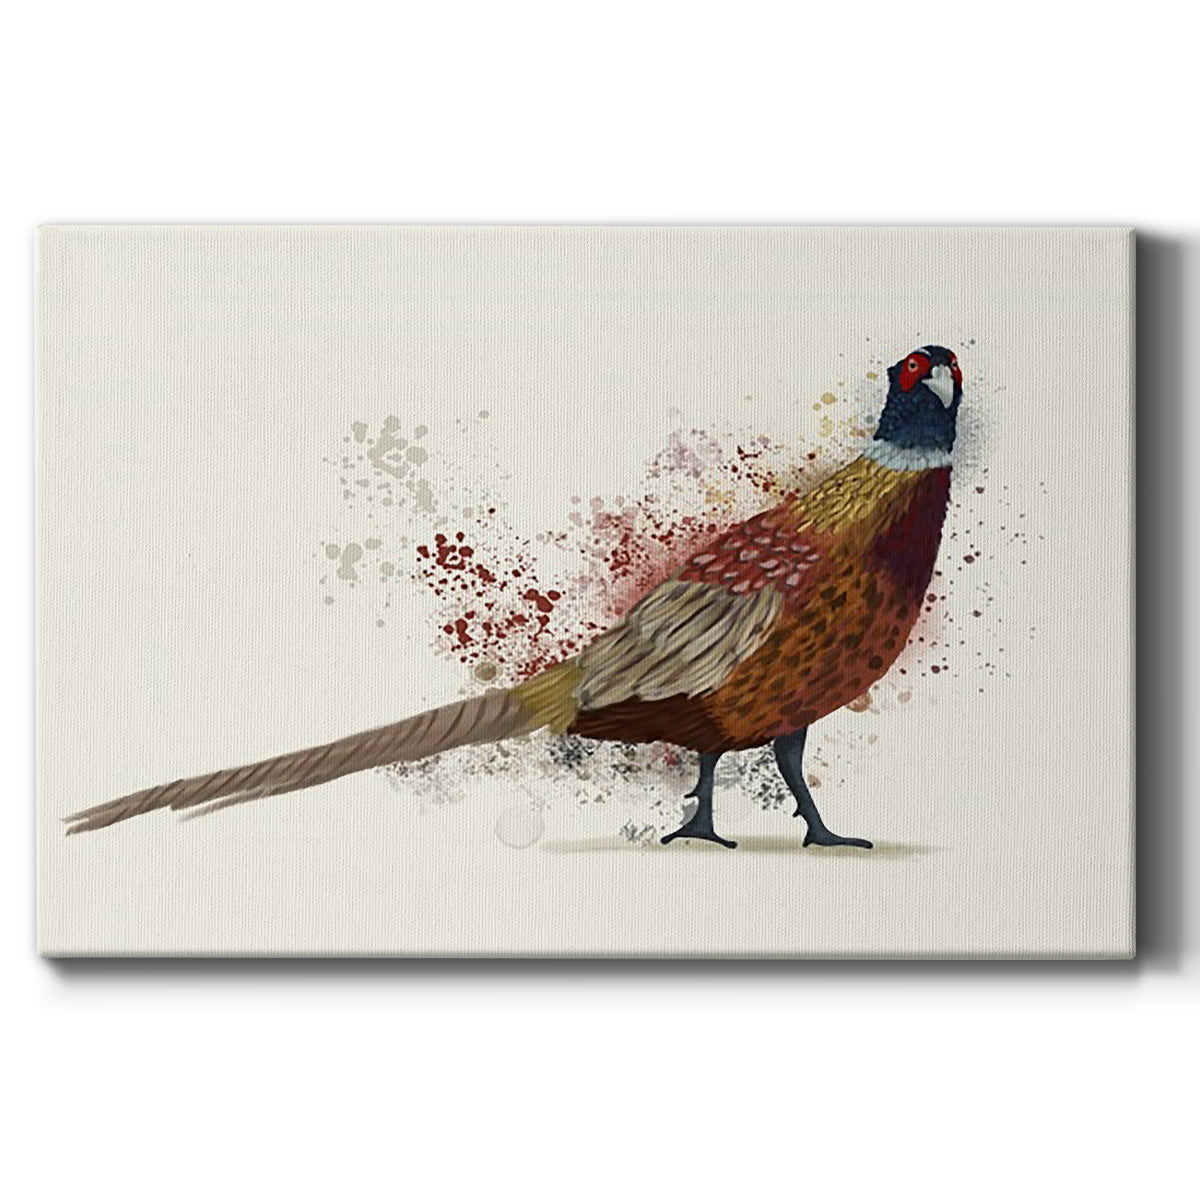 Pheasant Splash 2 Premium Gallery Wrapped Canvas - Ready to Hang